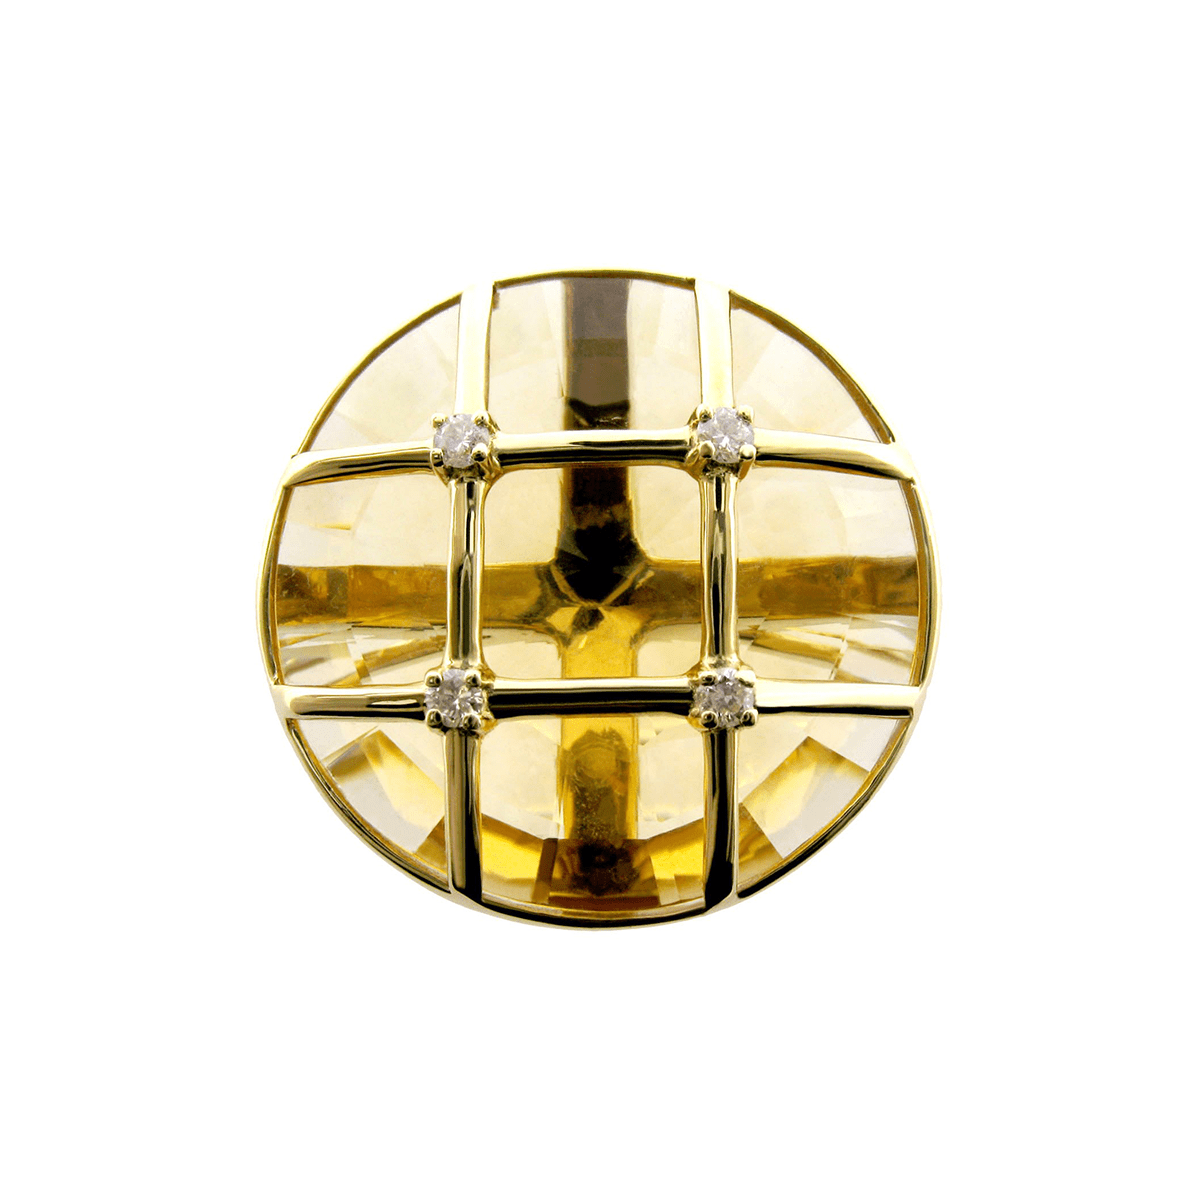 Women’s Ring - Aire-Grid Ring - 18 Karat Yellow Gold, Diamond and Citrine Gemstone